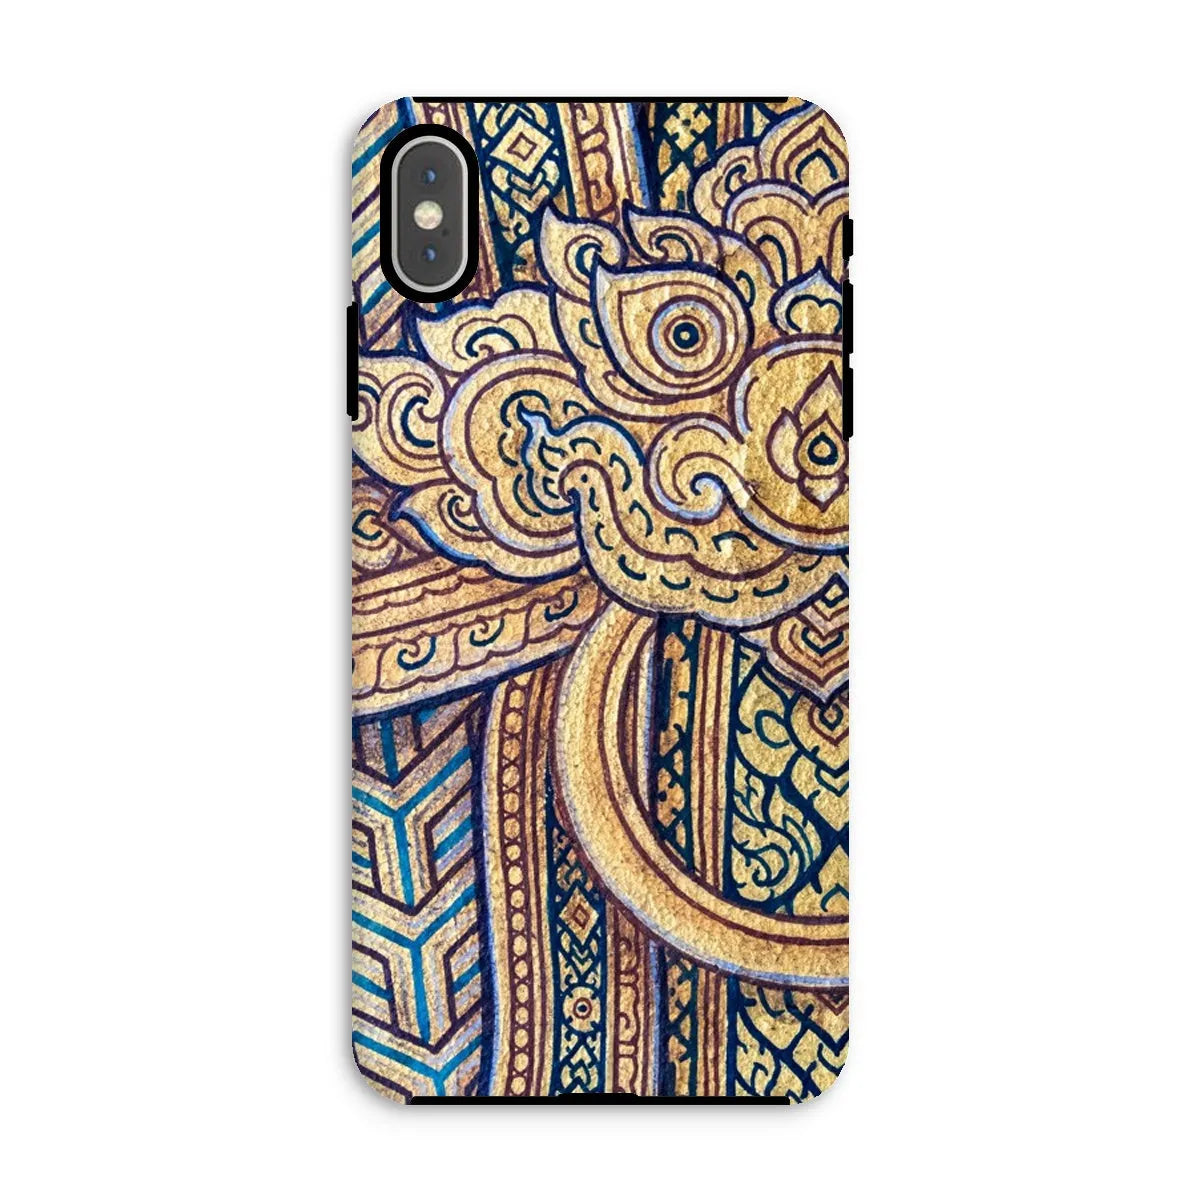 Man’s Best Friend - Thai Aesthetic Art Phone Case - Iphone Xs Max / Matte - Mobile Phone Cases - Aesthetic Art